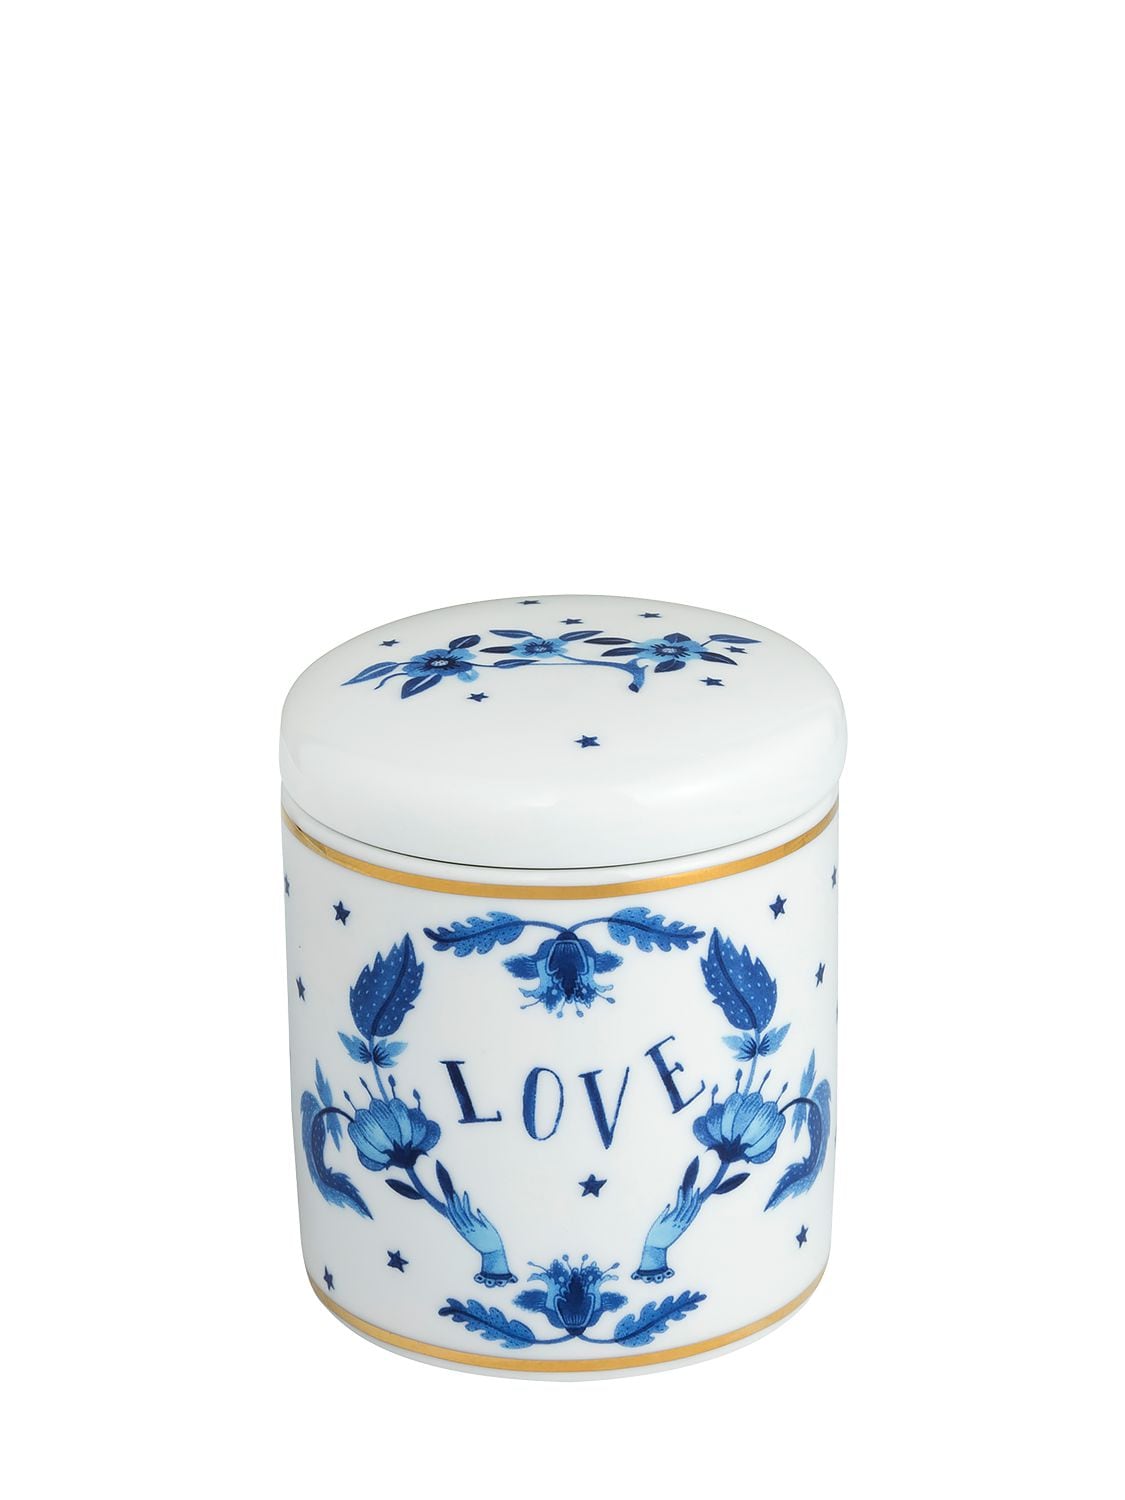 Bitossi Home Love Blu Scented Candle In White,blue